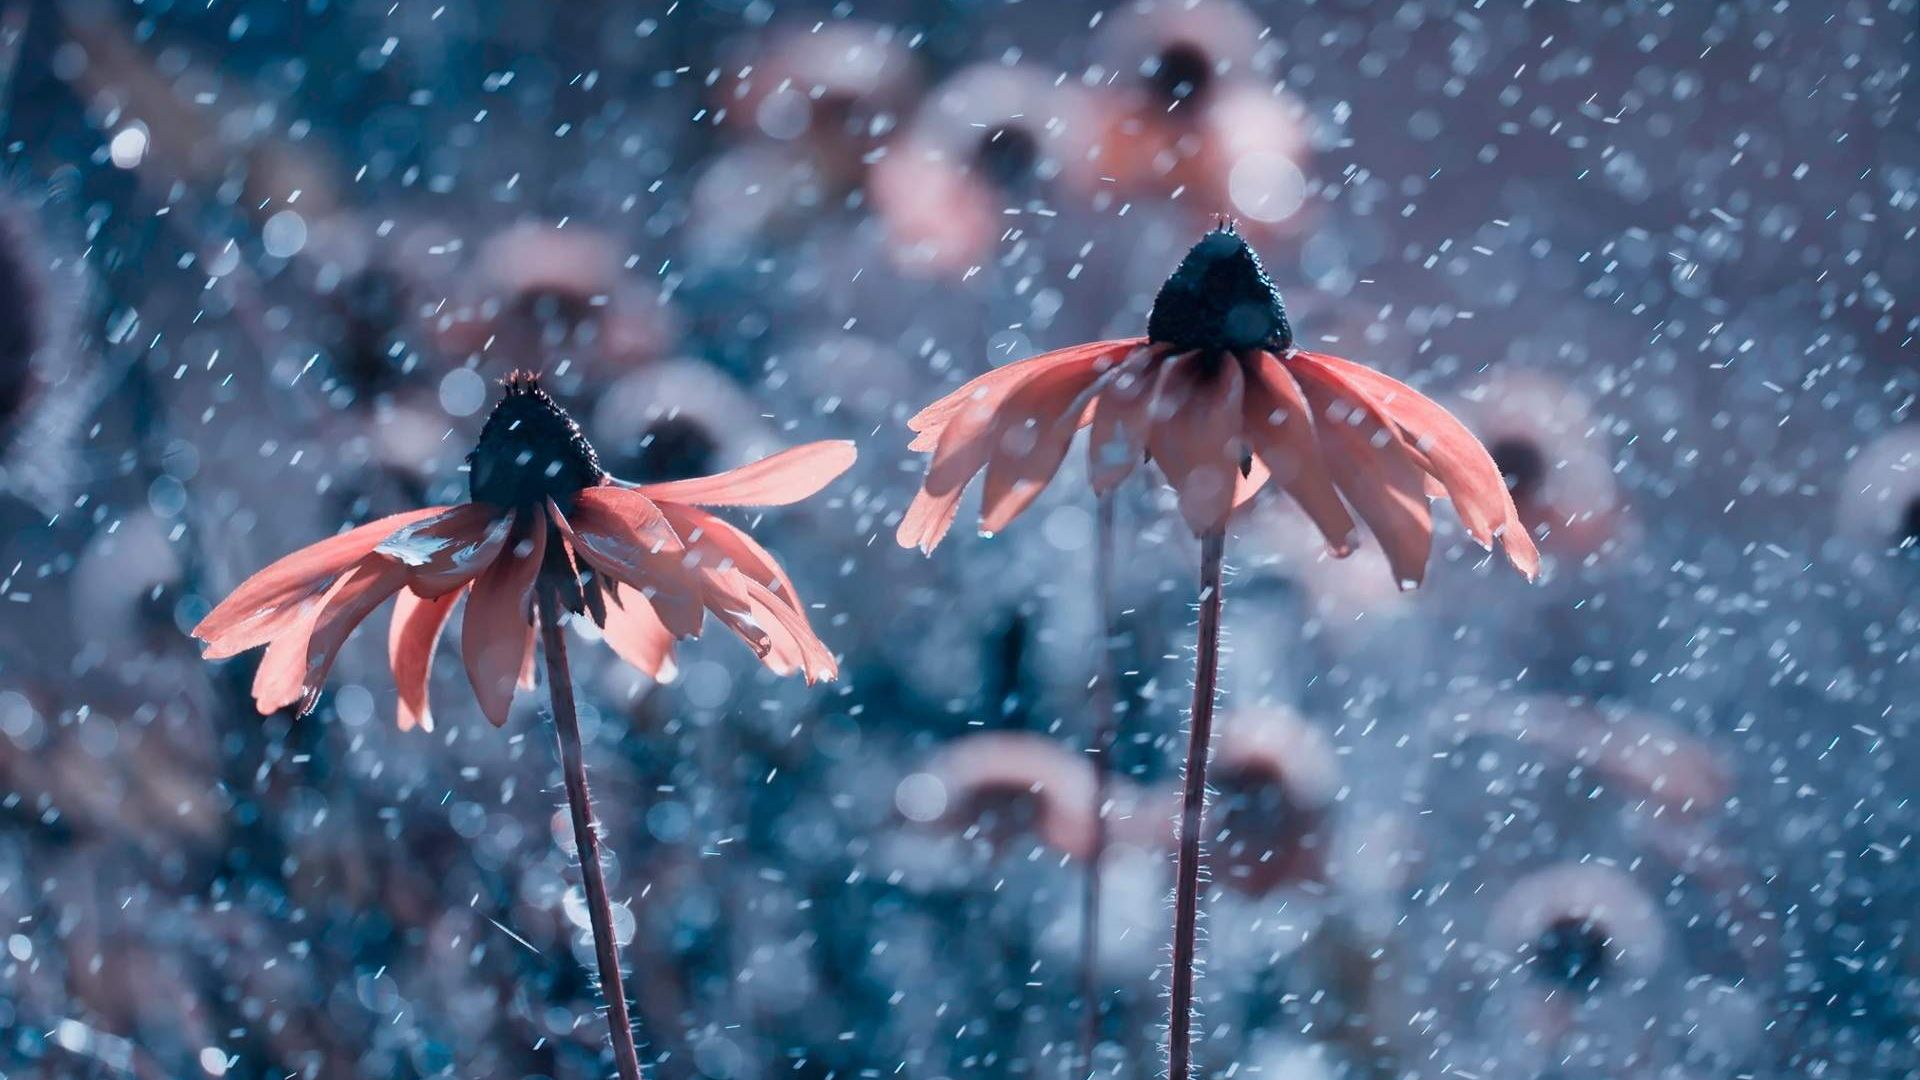 1000 Flower Rain Pictures  Download Free Images on Unsplash